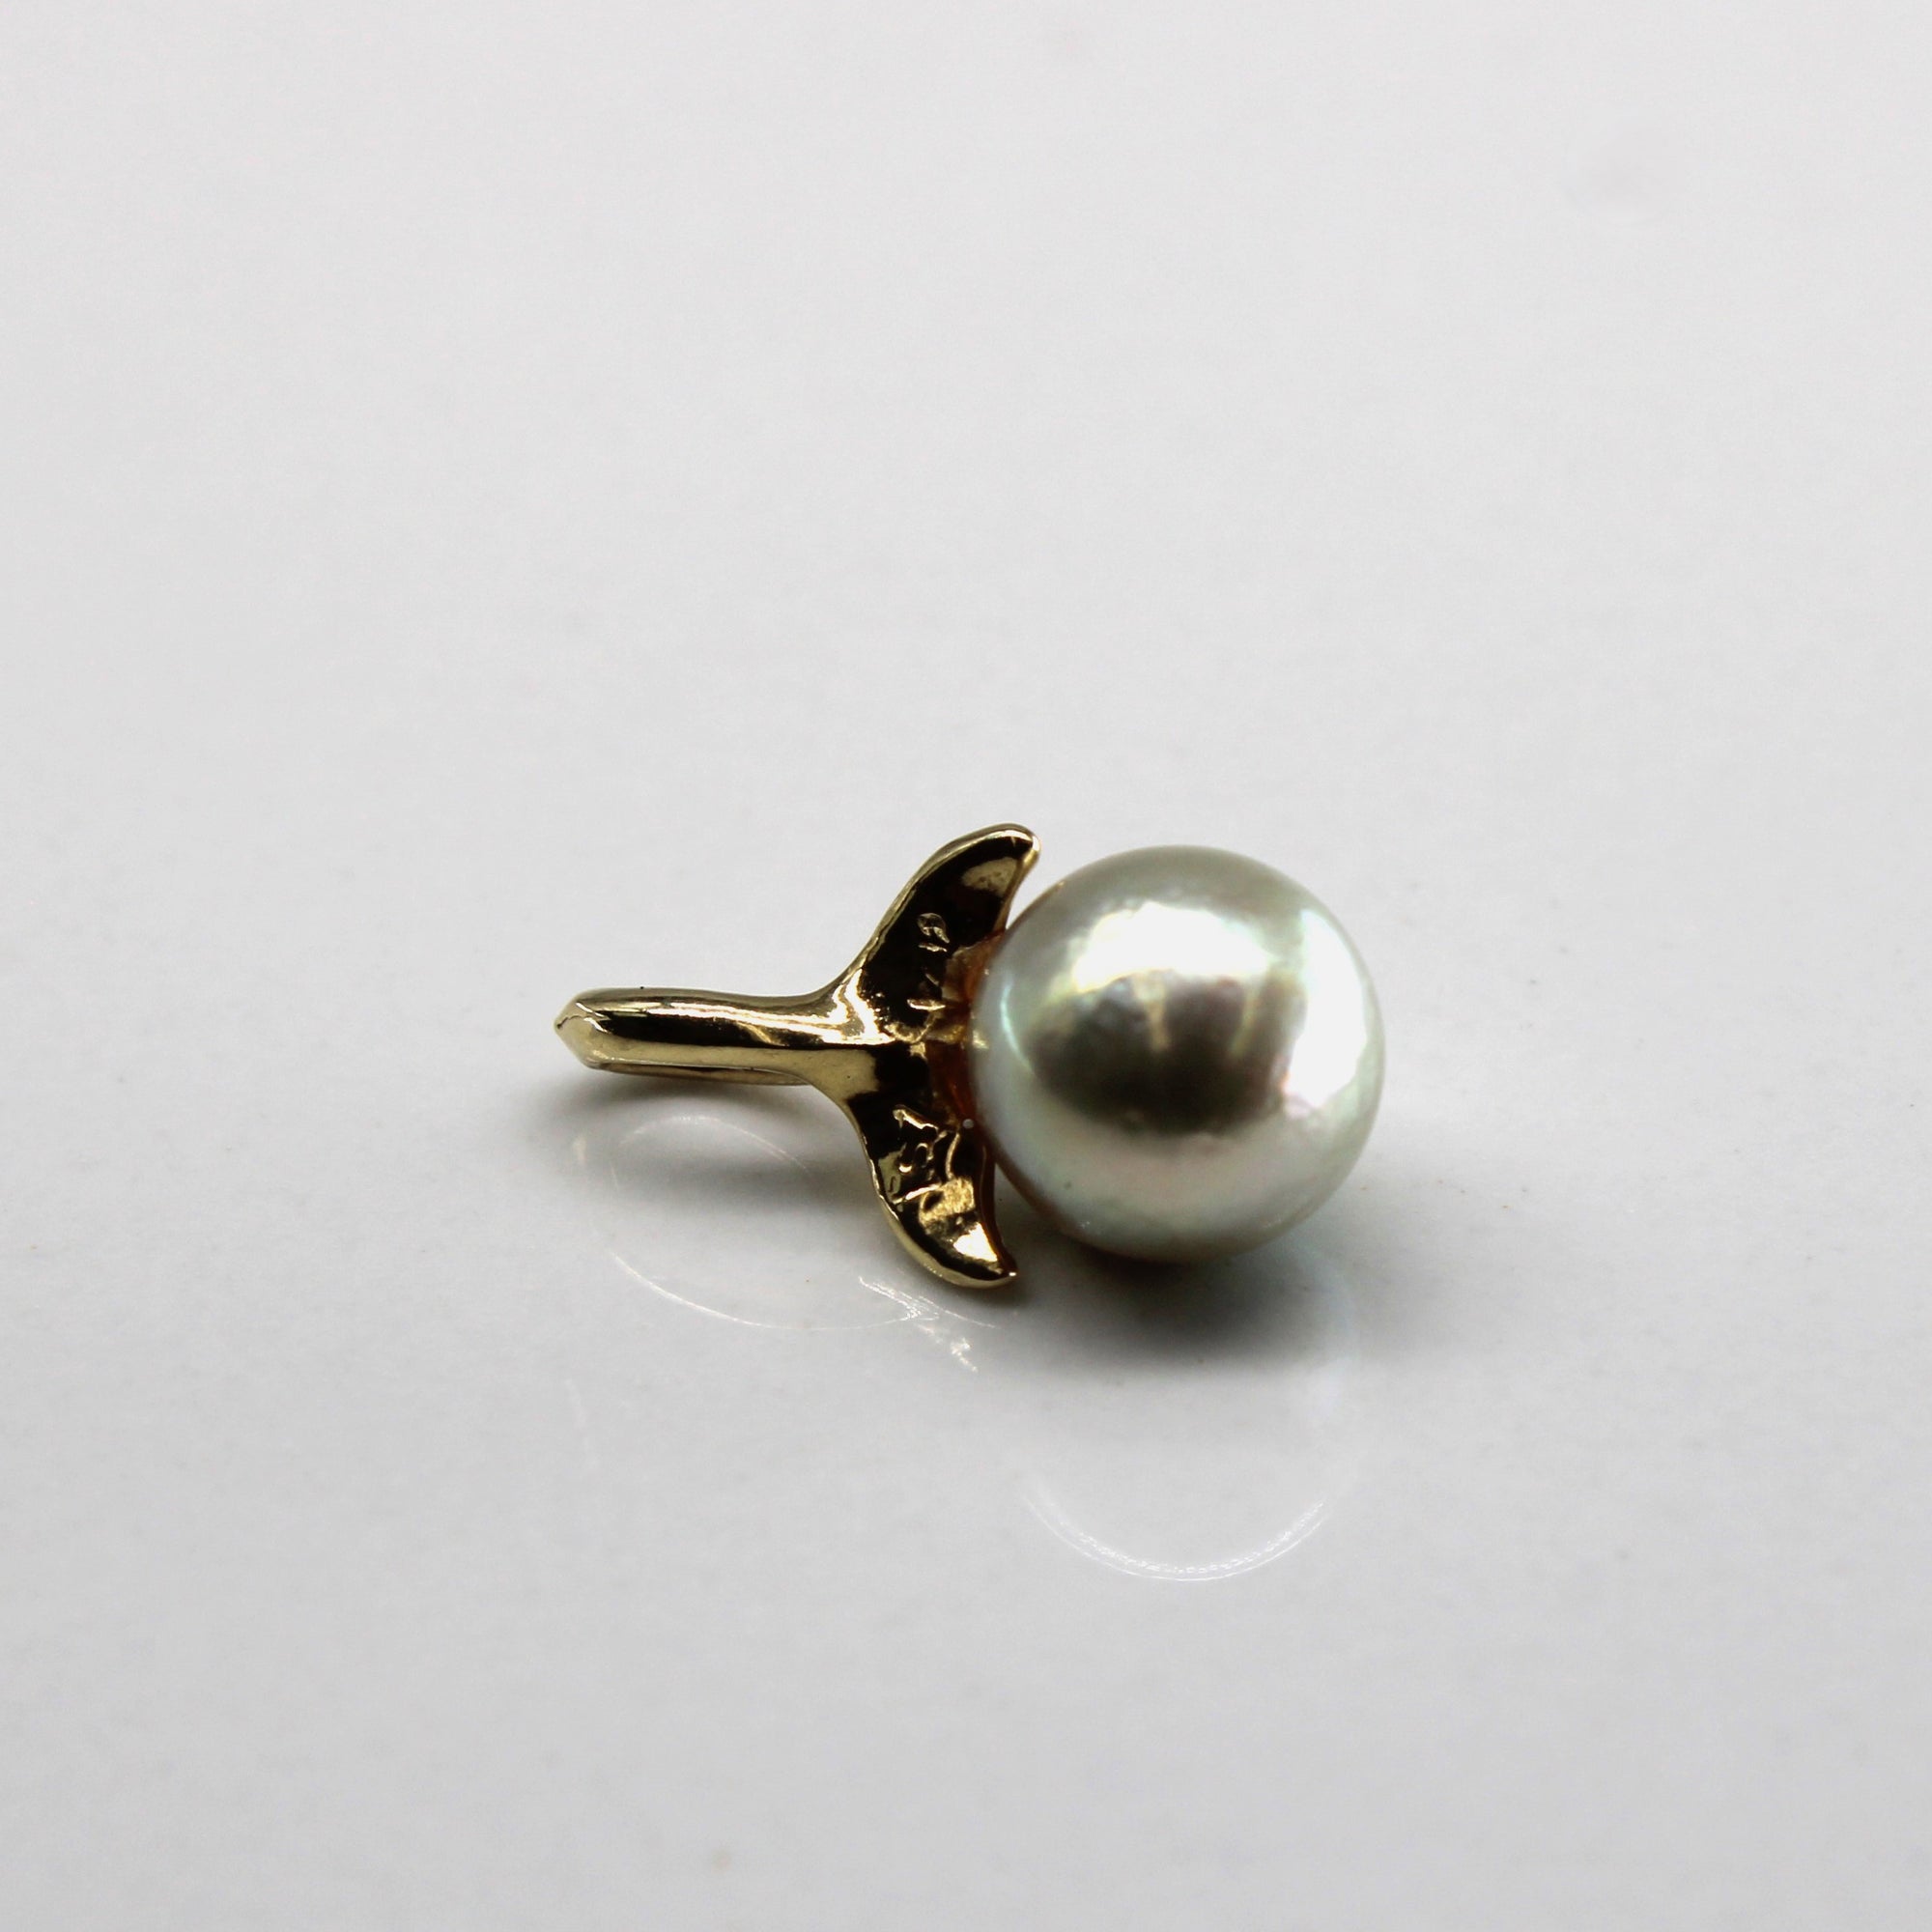 Pearl Drop Pendant